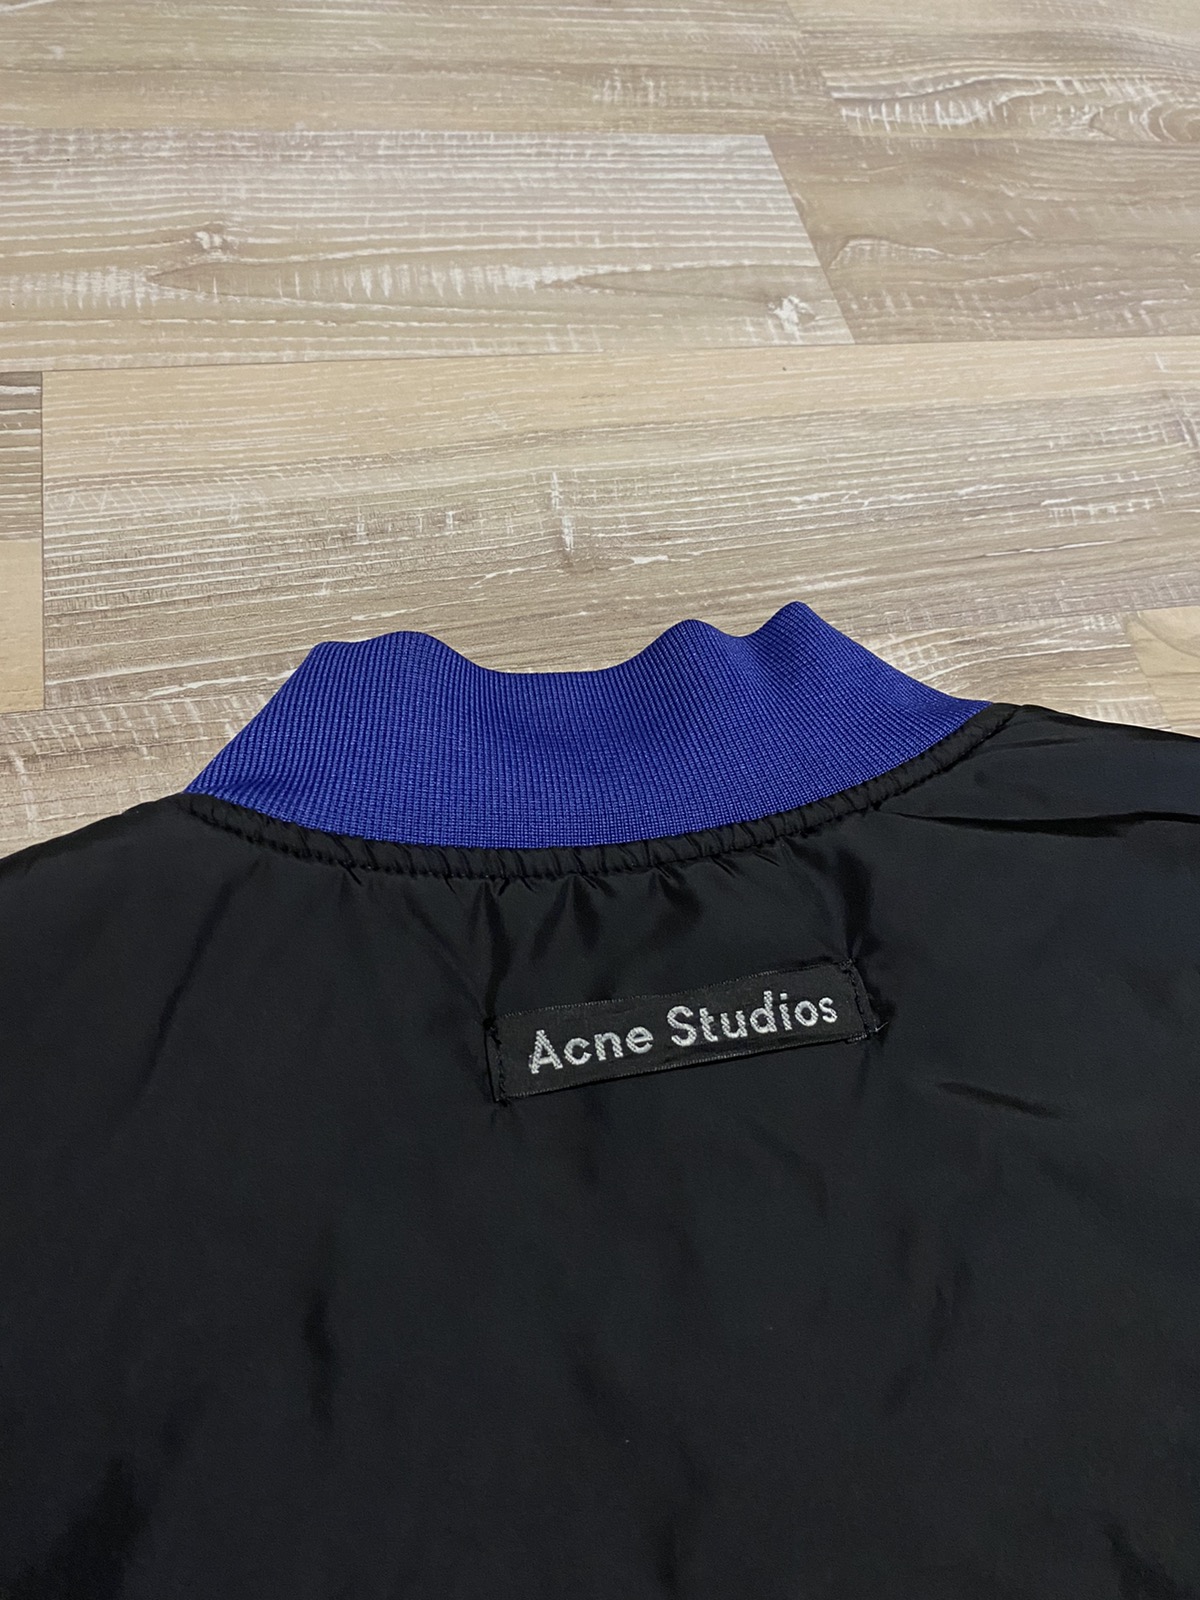 Acne Studios mills face PAW17 reversible jacket bomber - 11